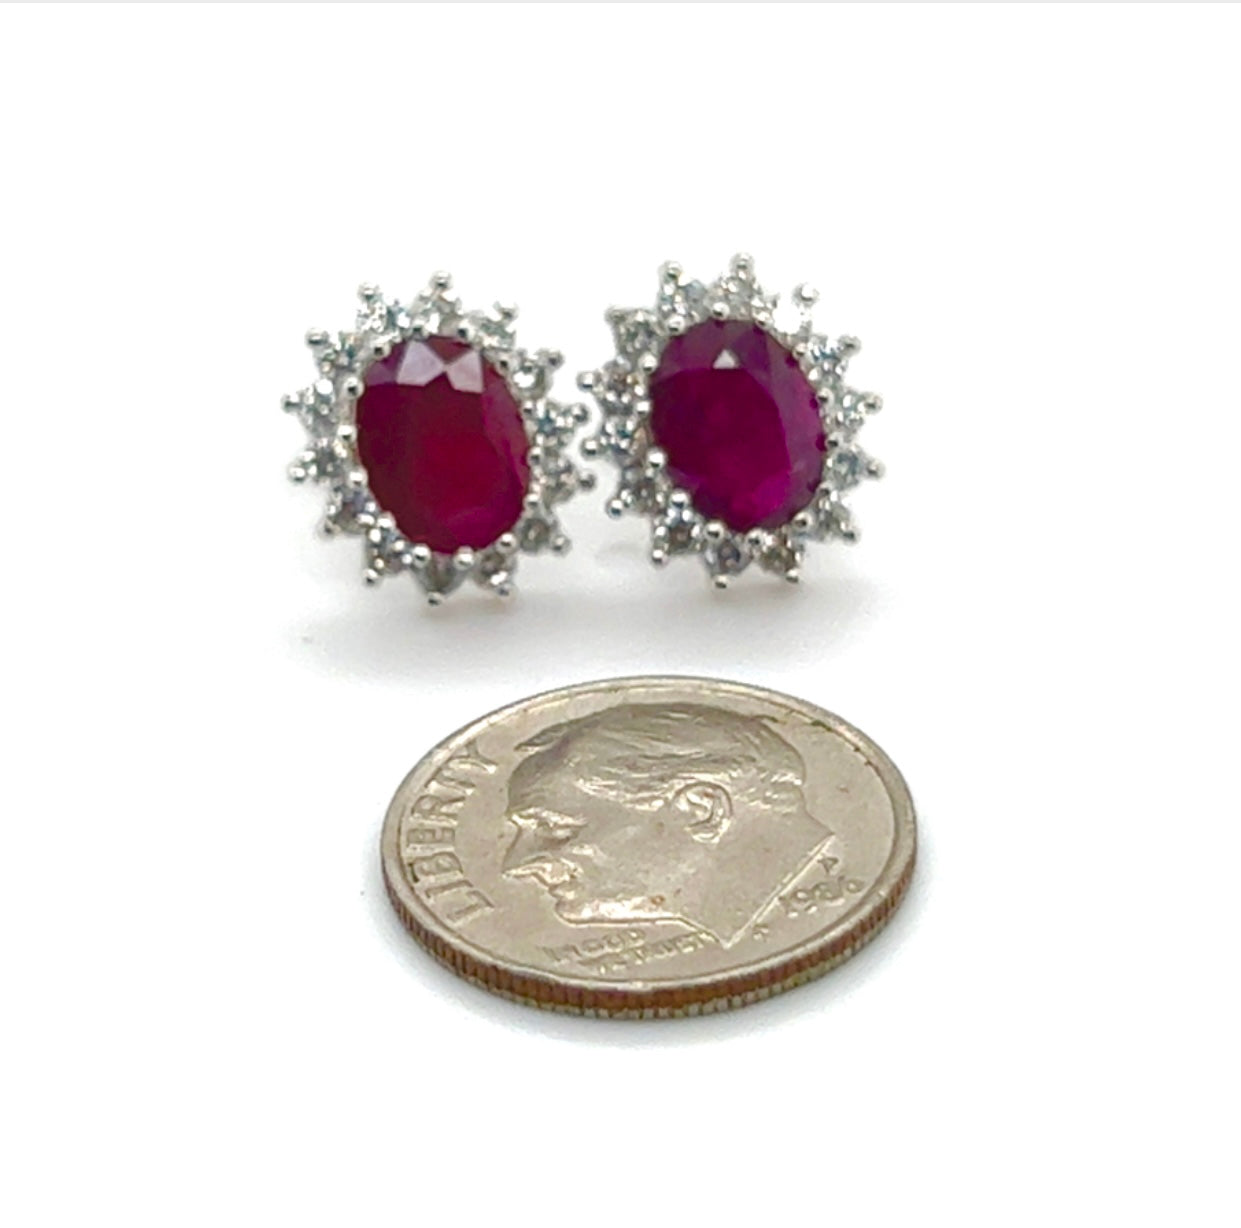 Natural Ruby Diamond Earrings 14k Gold 4.04 TCW Certified $5,250 215094 - Certified Estate Jewelry